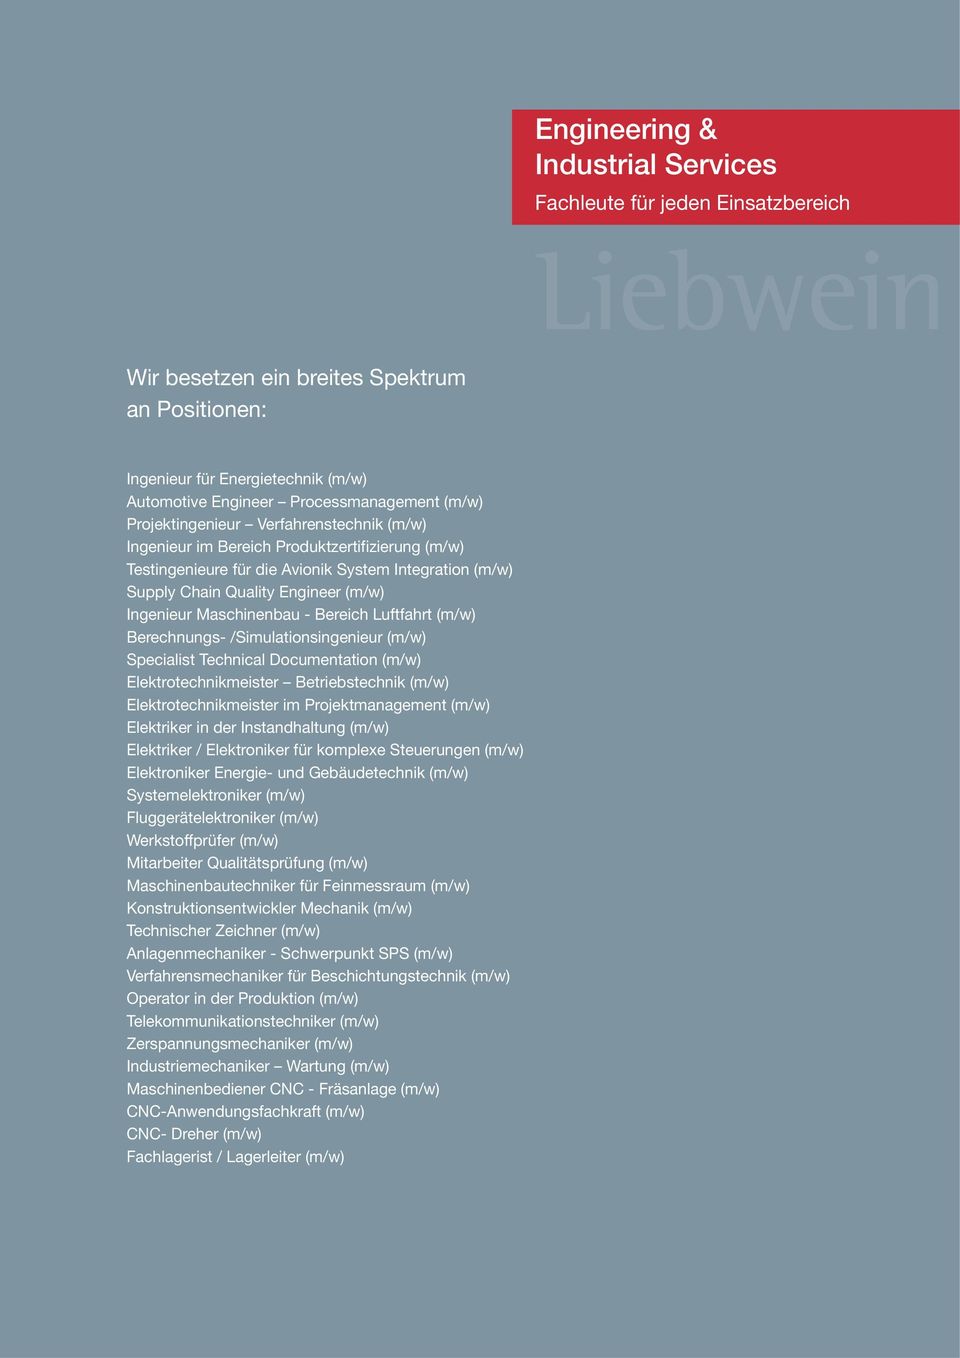 Maschinenbau - Bereich Luftfahrt (m/w) Berechnungs- /Simulationsingenieur (m/w) Specialist Technical Documentation (m/w) Elektrotechnikmeister Betriebstechnik (m/w) Elektrotechnikmeister im